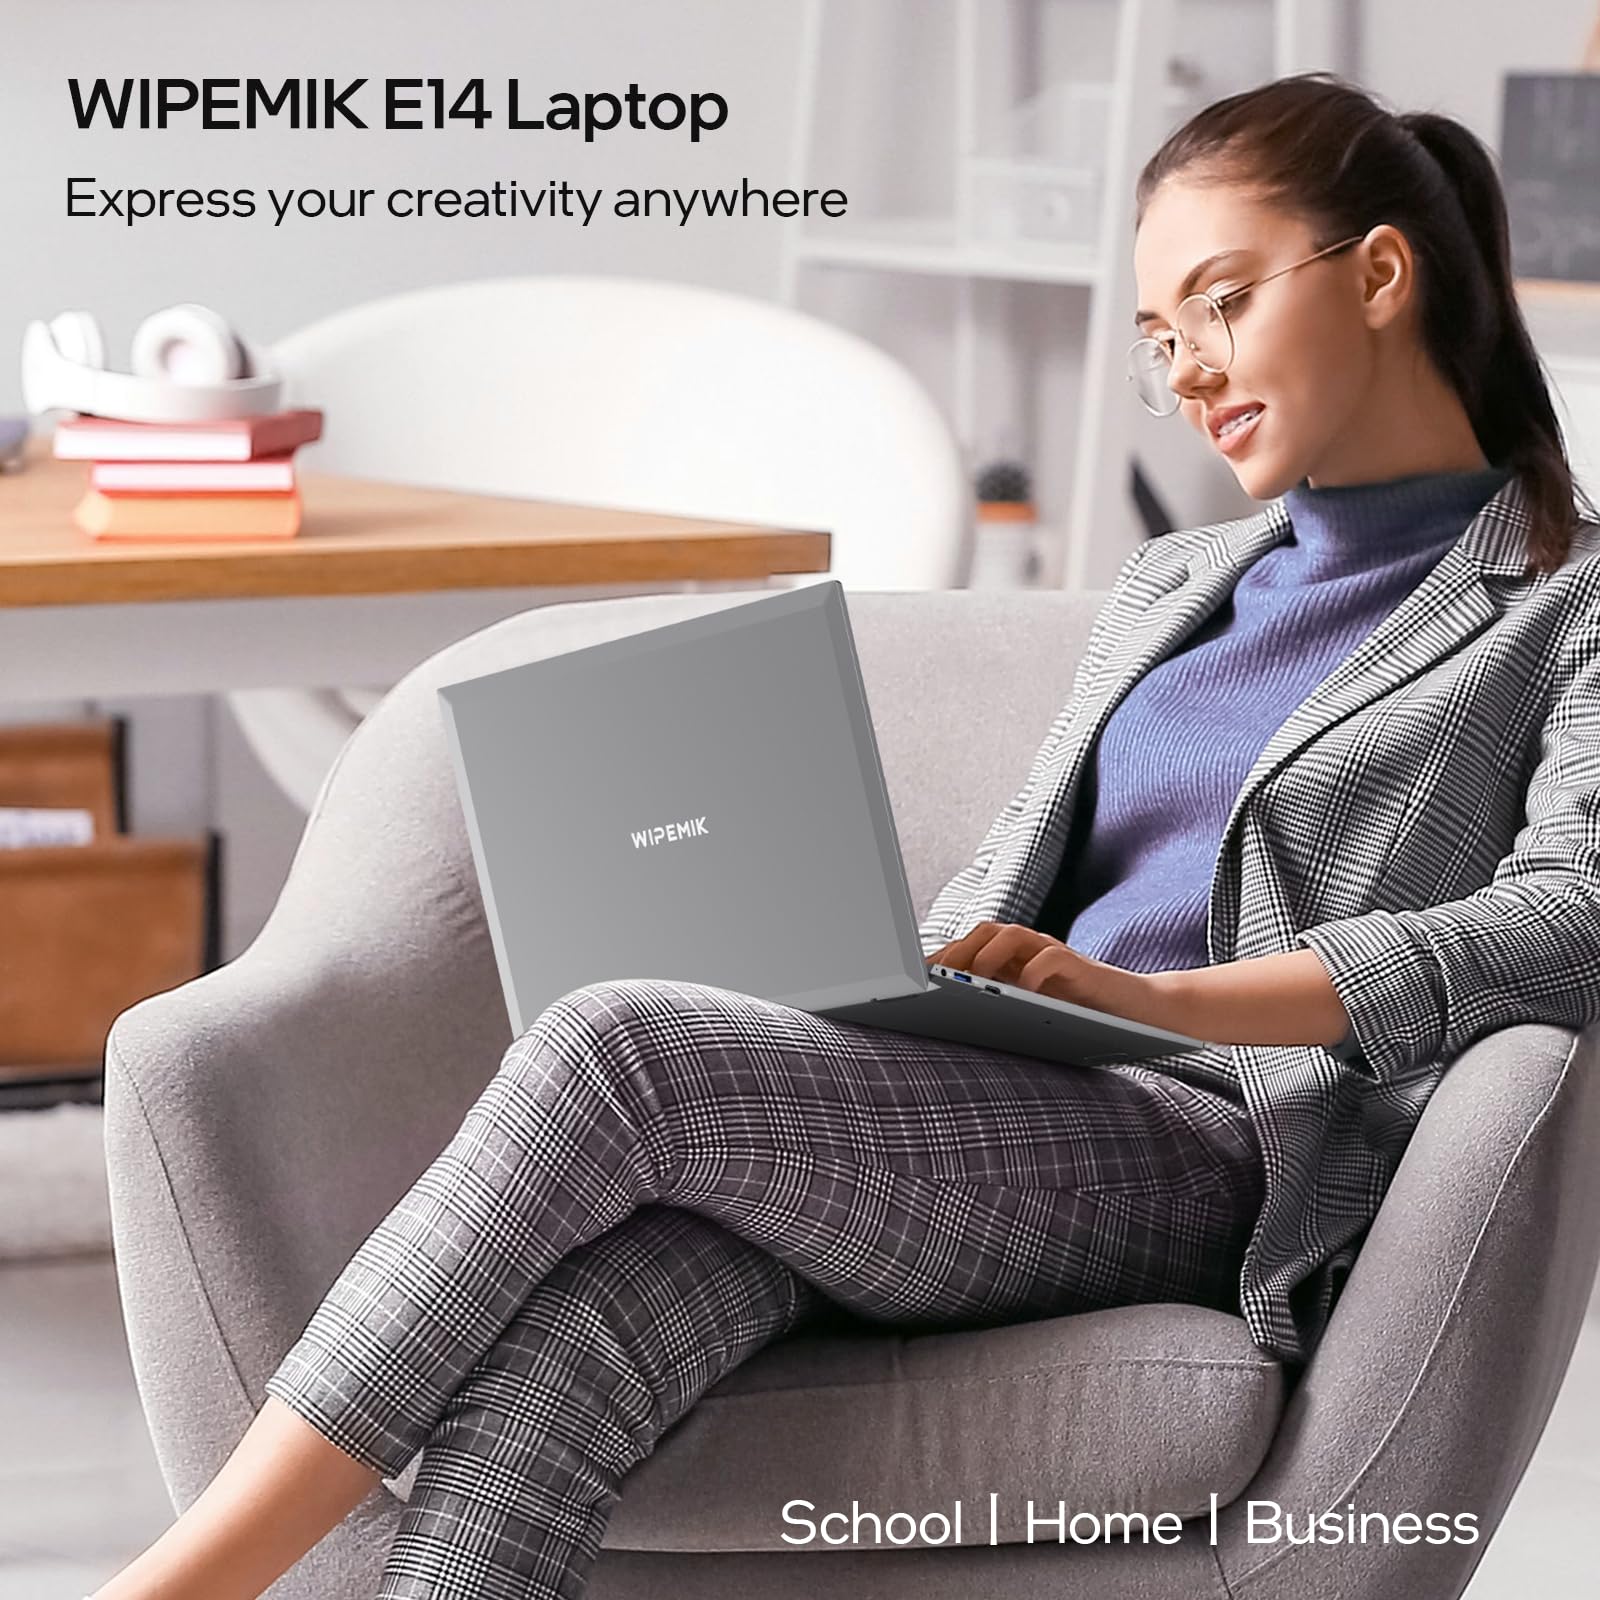 WIPEMIK Laptop, Win 11 Laptop Computer, 12GB RAM 512GB SSD, Quad-Cores N4120 Processor, 14" Full HD Win 11 Pro Laptops, Support 2.4G/5G WiFi, Bluetooth 4.2, USB 3.0, Long Lasting Battery